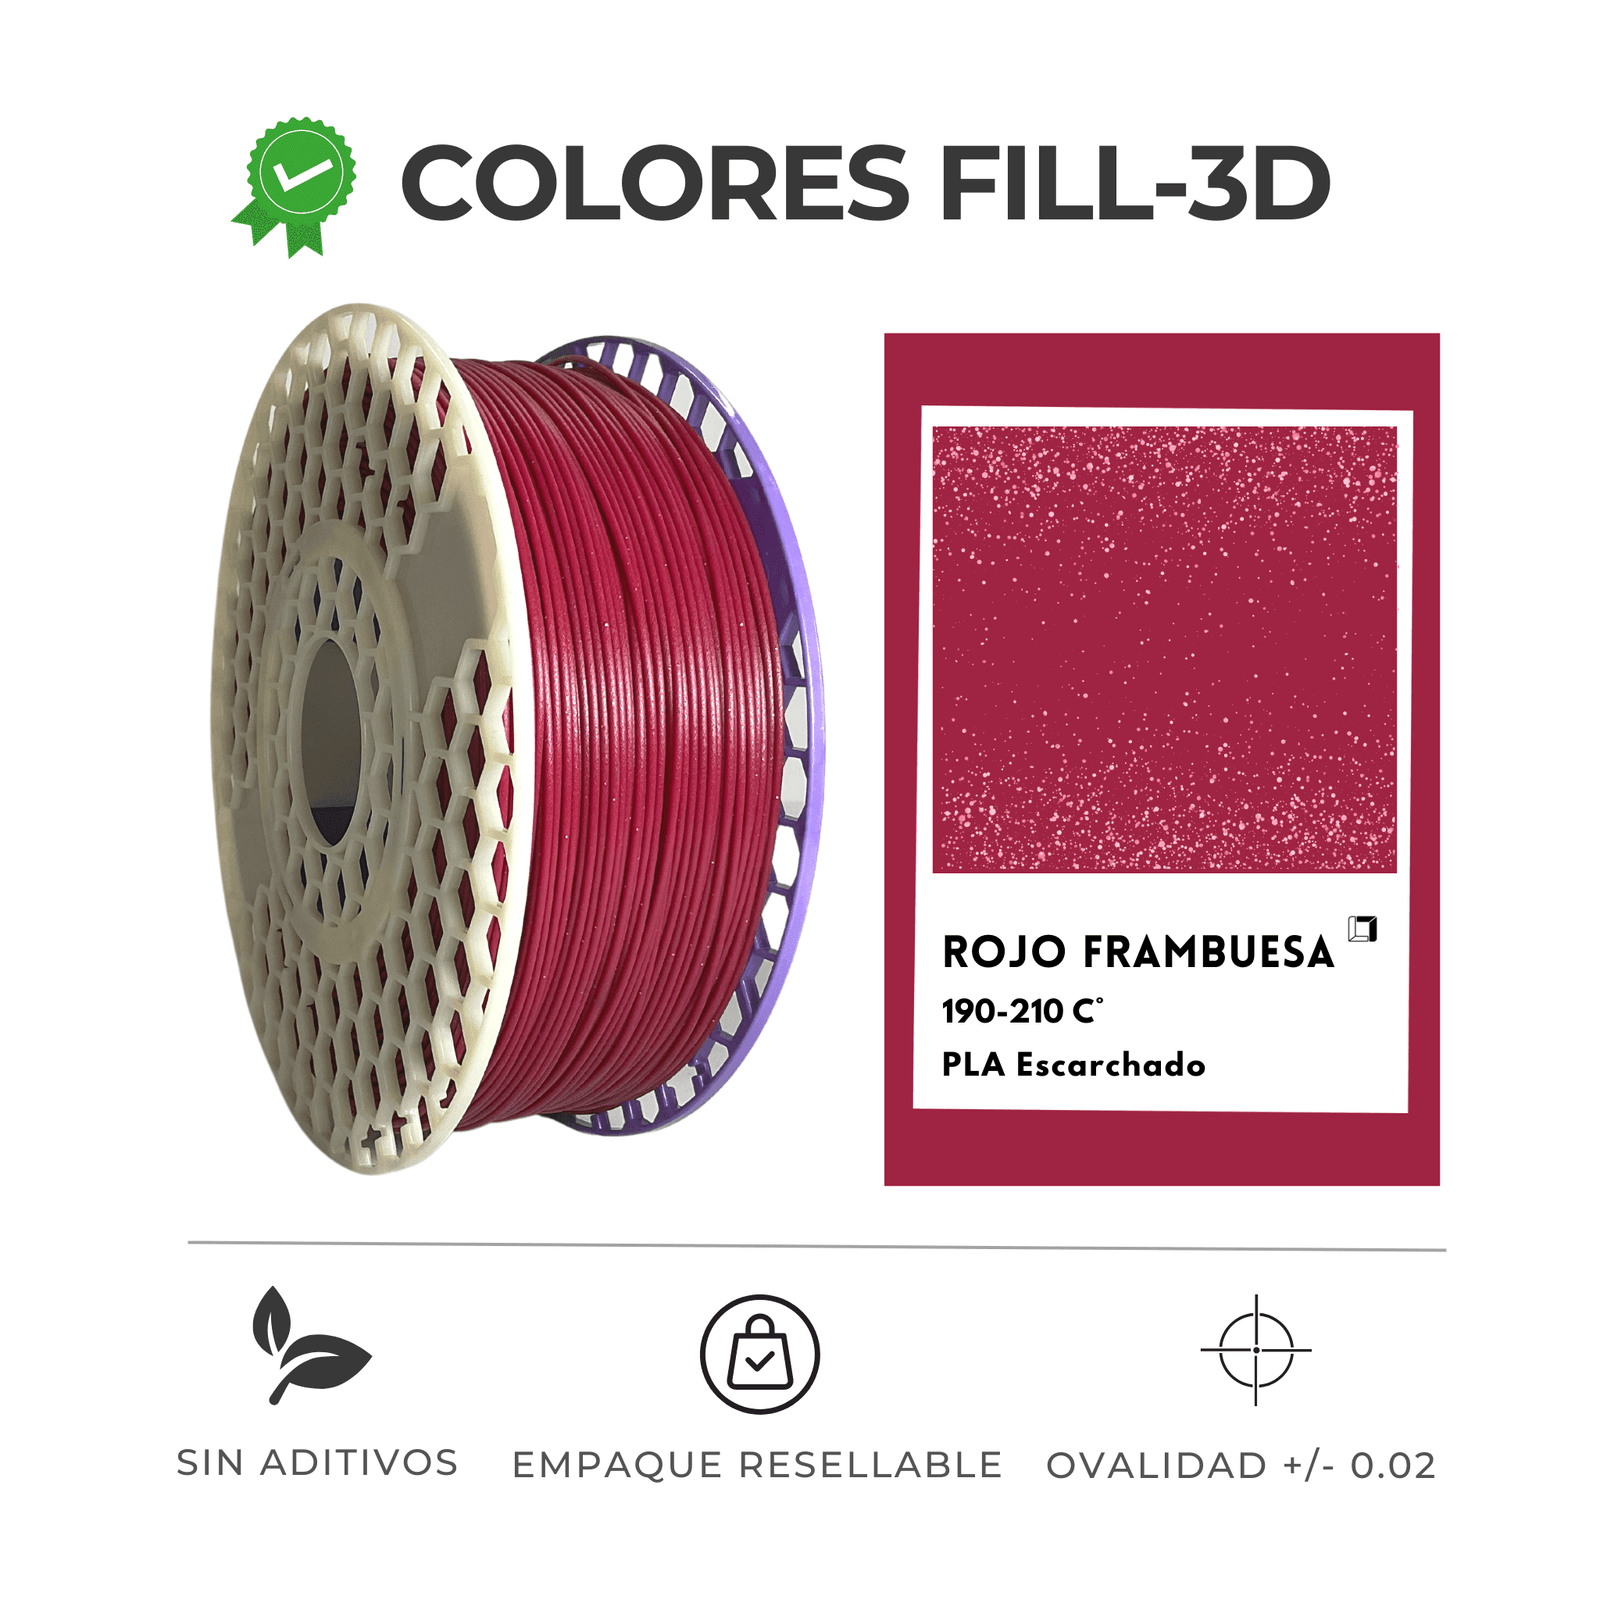 Filamento PLA 1.75 mm Color Rojo Frutal sin aditivos Fill-3d